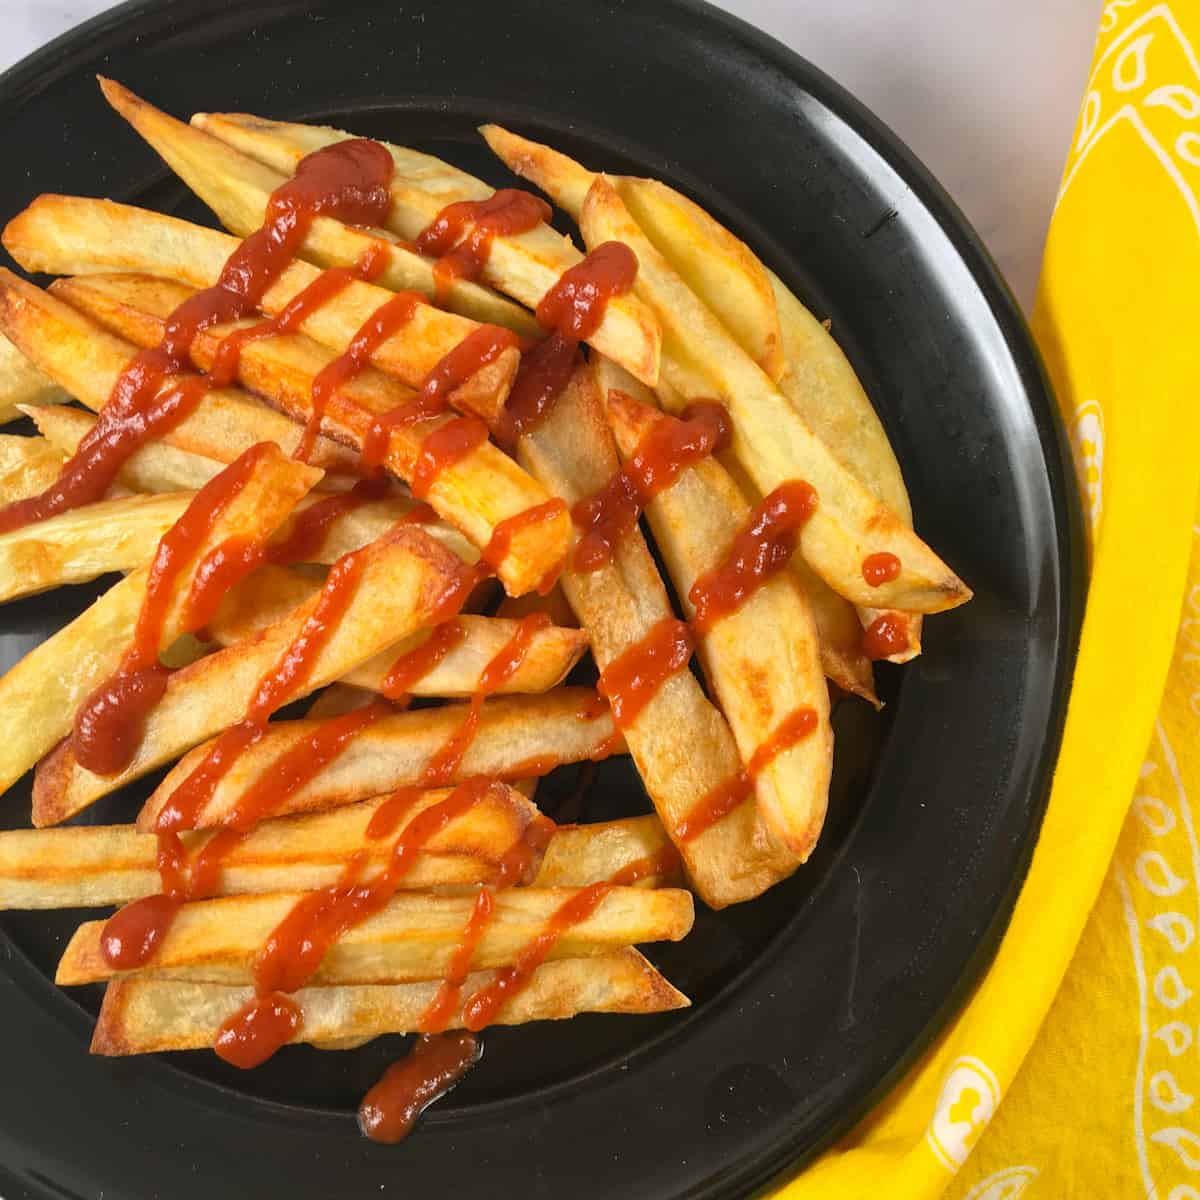 patatas fritas y ketchup